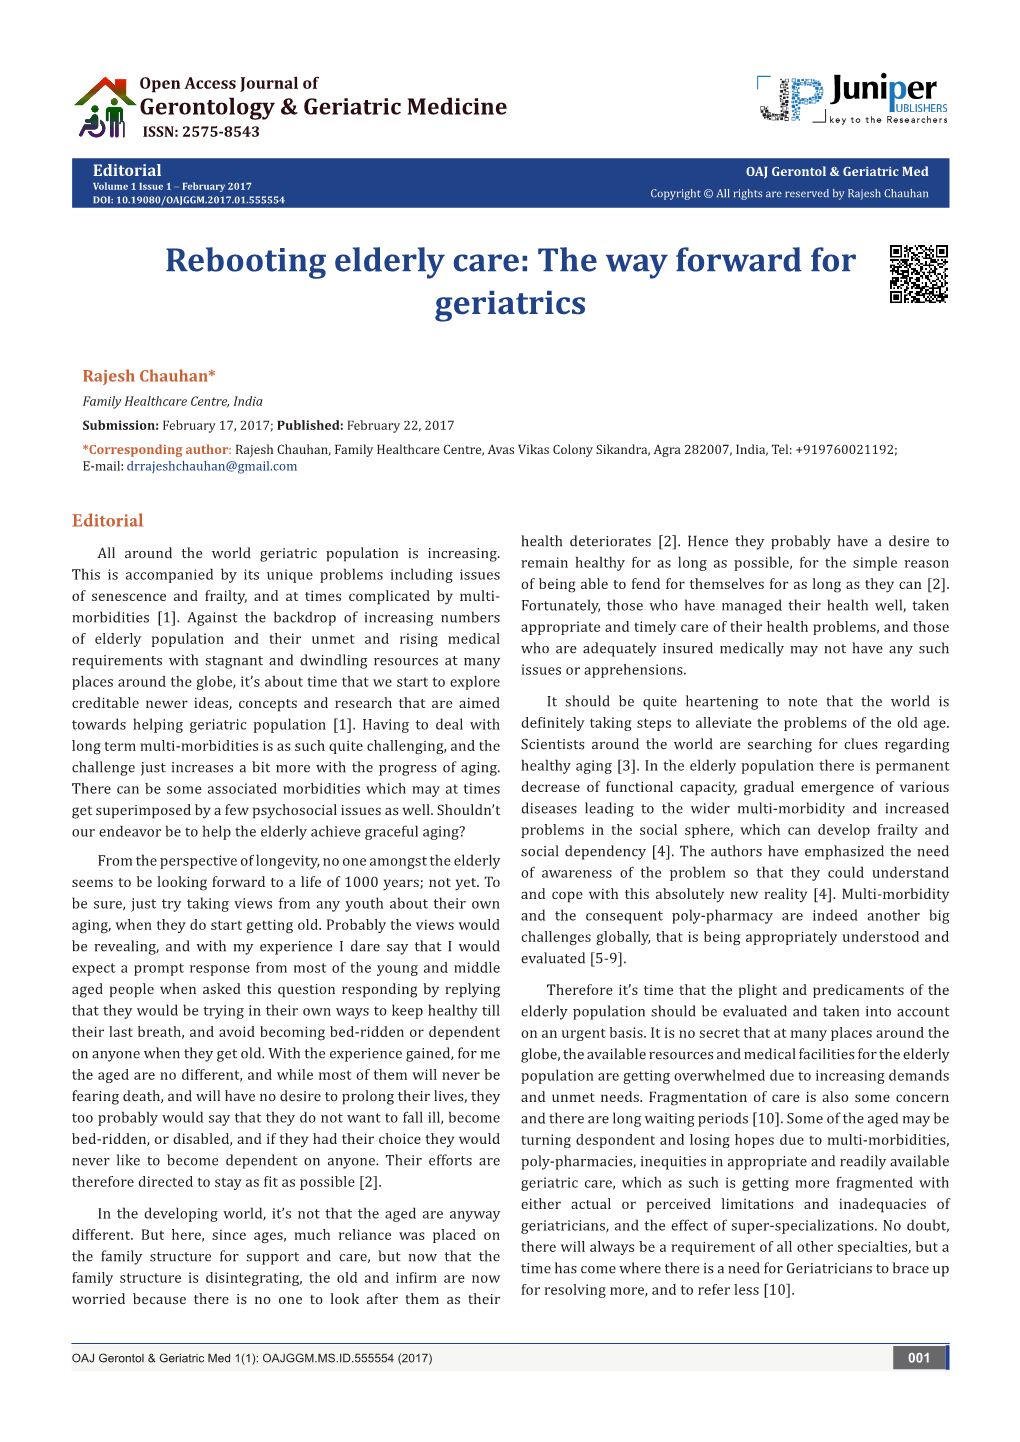 (2017) Rebooting Elderly Care: the Way Forward for Geriatrics